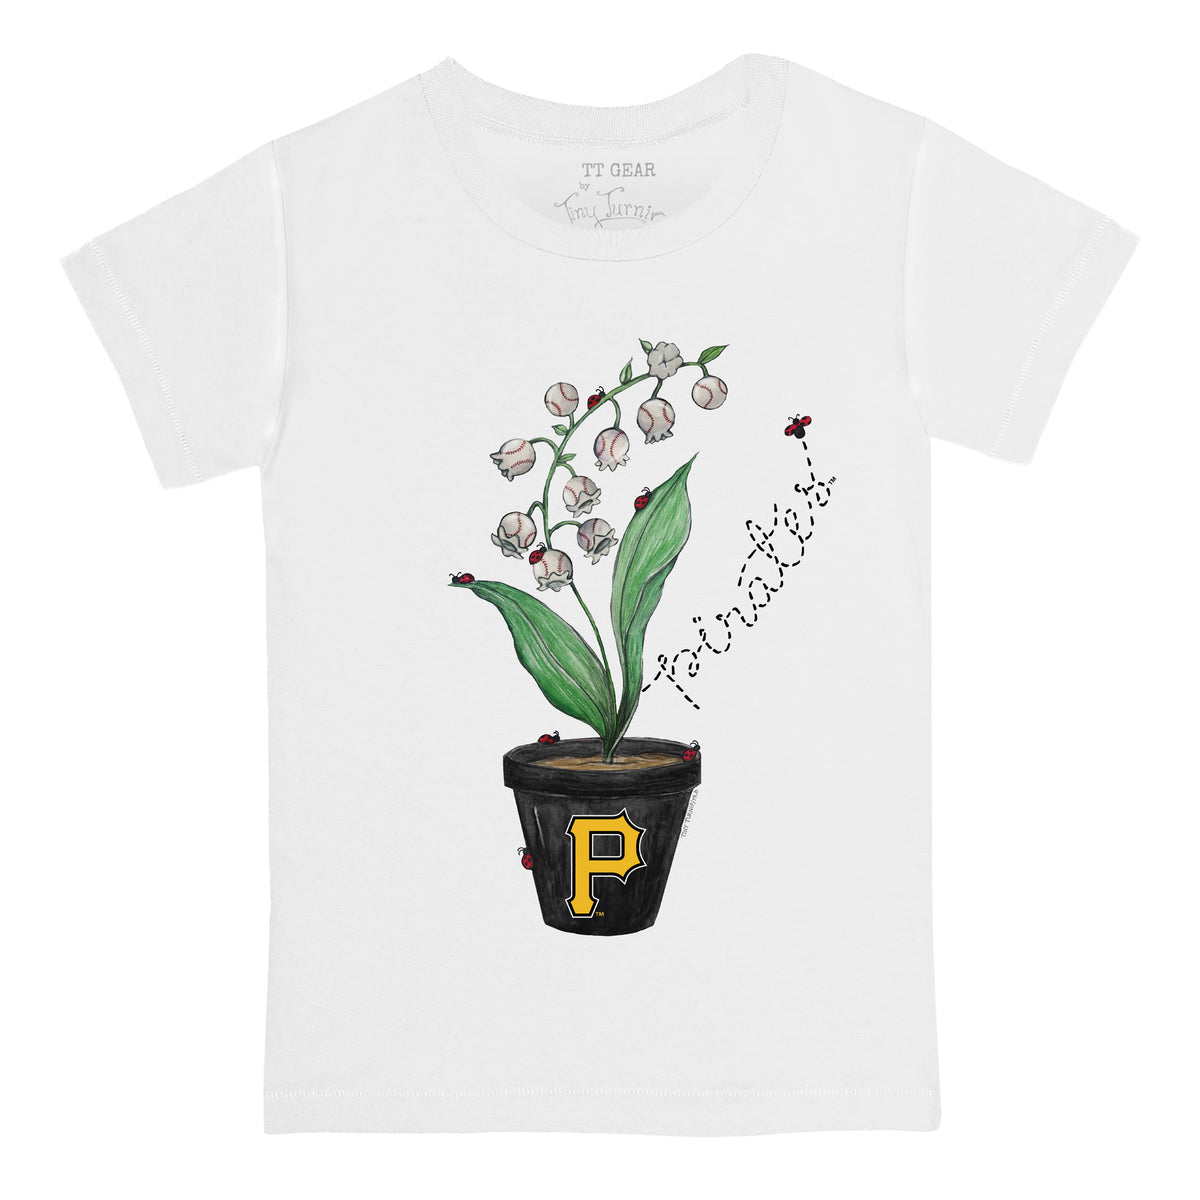 Pittsburgh Pirates Ladybug Tee Shirt